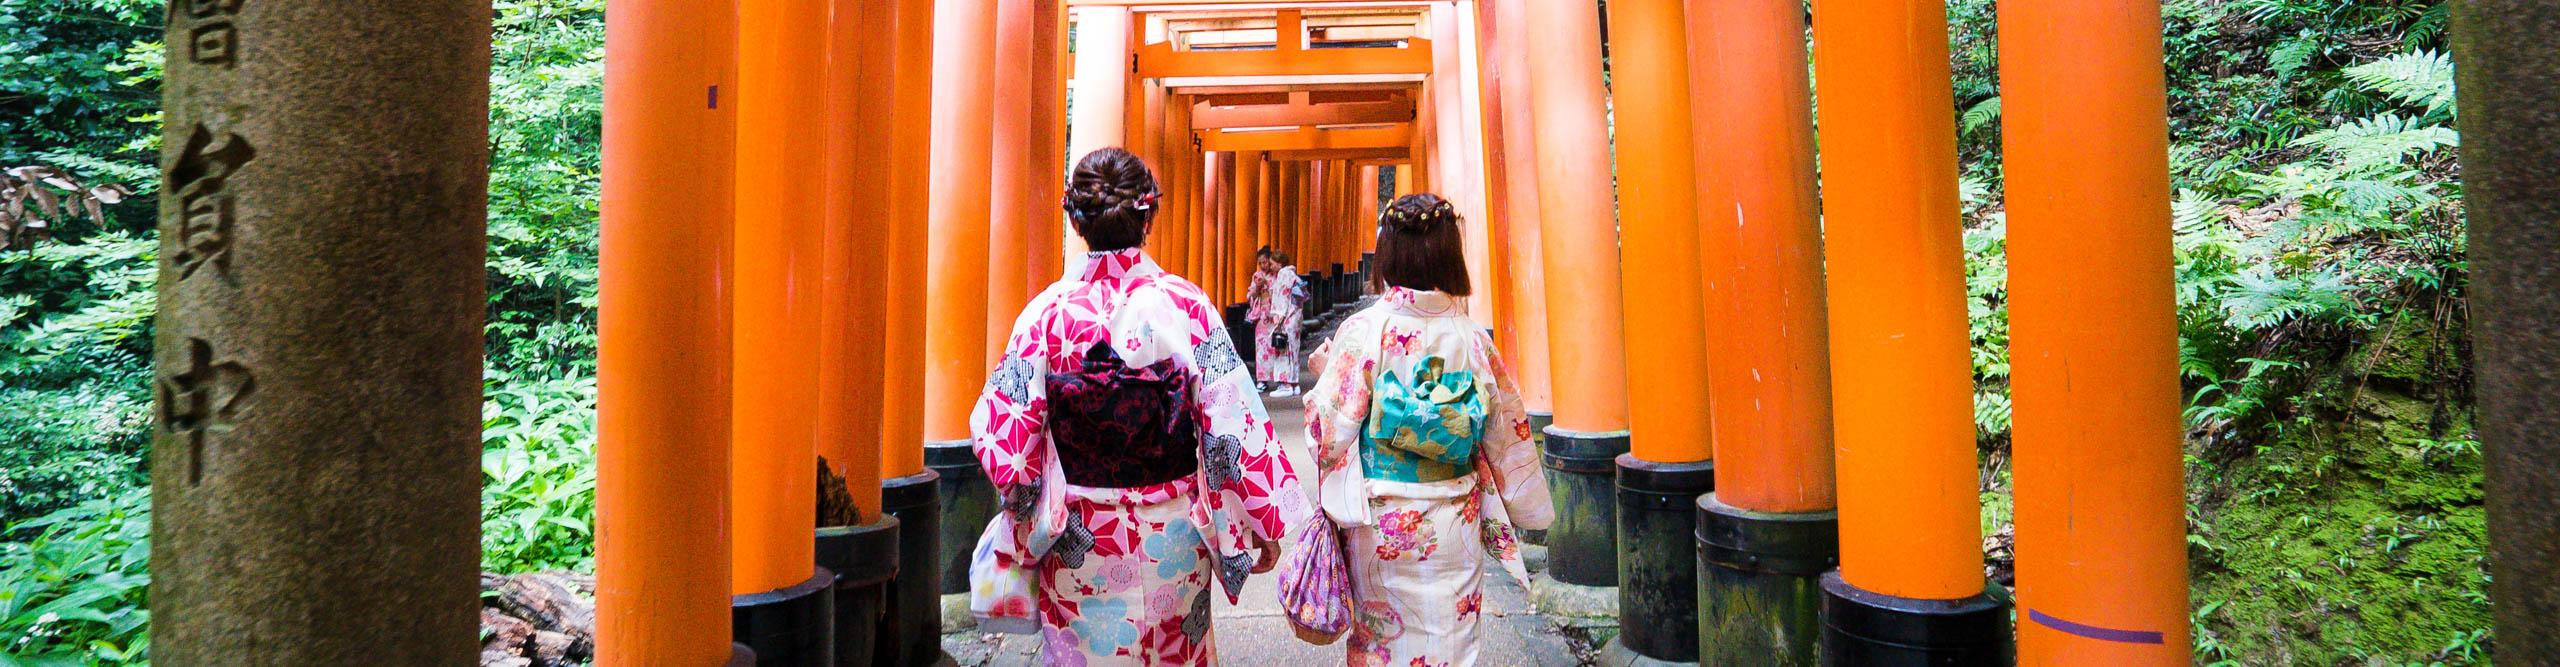 Women in Komonos walking through the Fushmi Shrine, Kyoto, Japan 